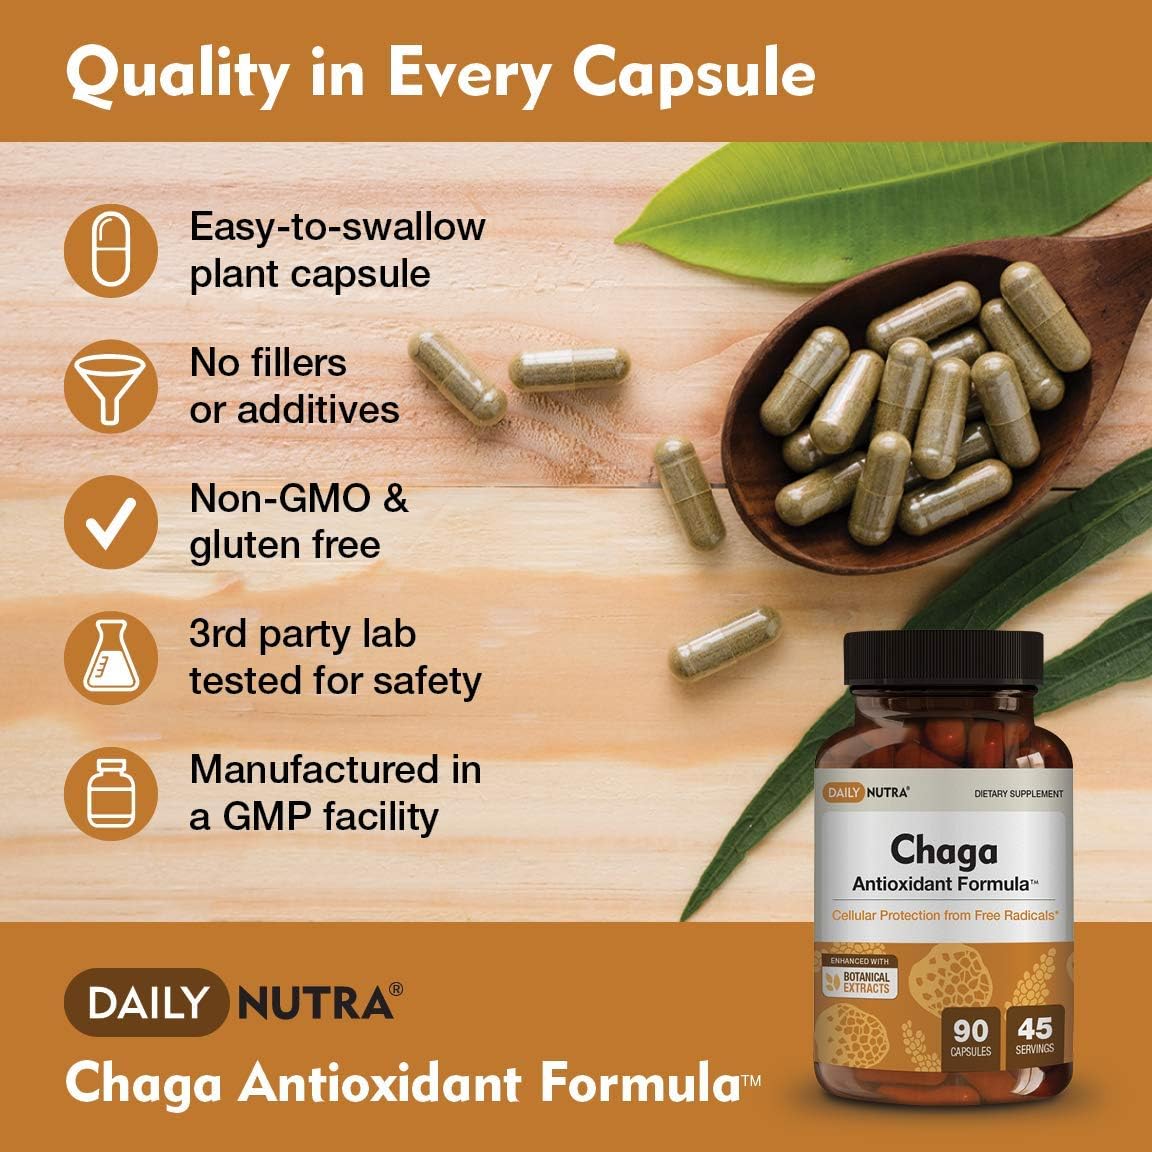 DailyNutra Chaga Antioxidant Formula Superfood Supplement - Protection